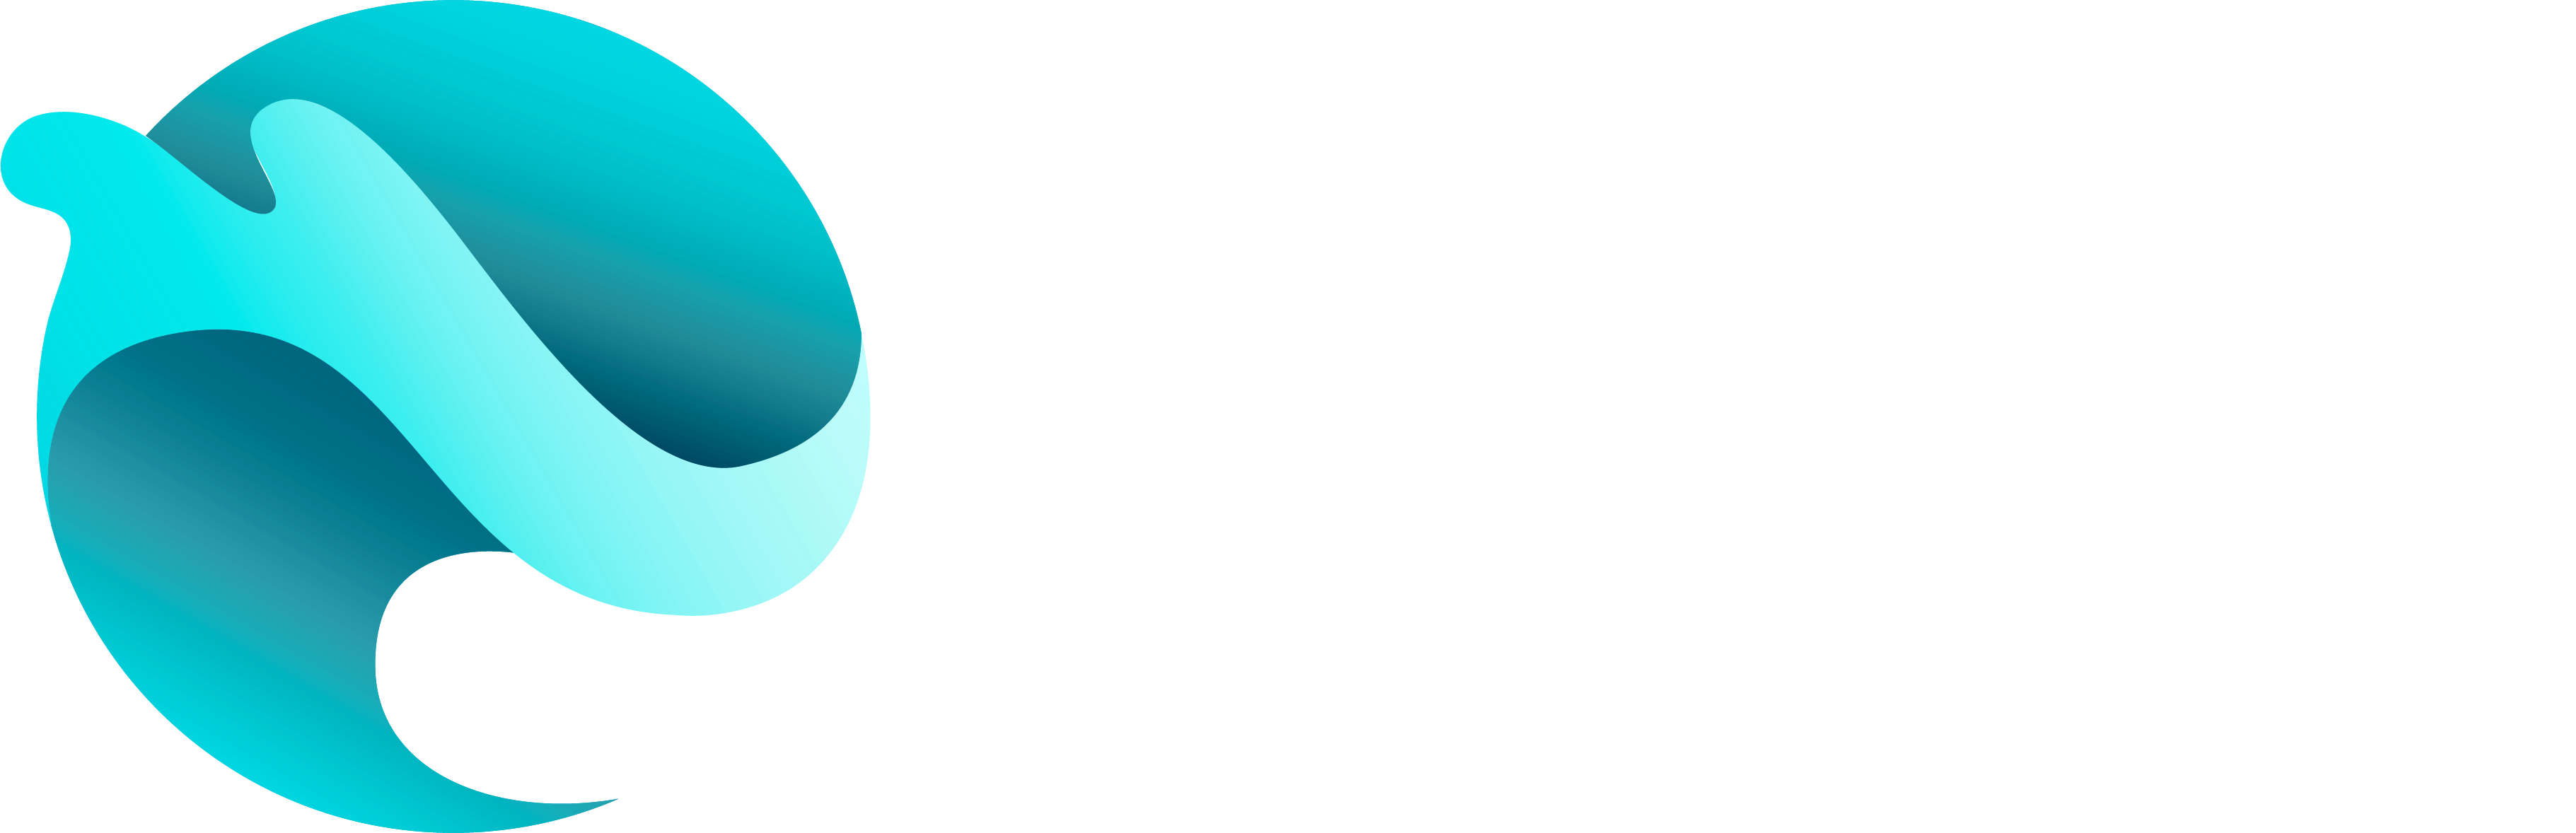 WaVS: Variable Speed System logo